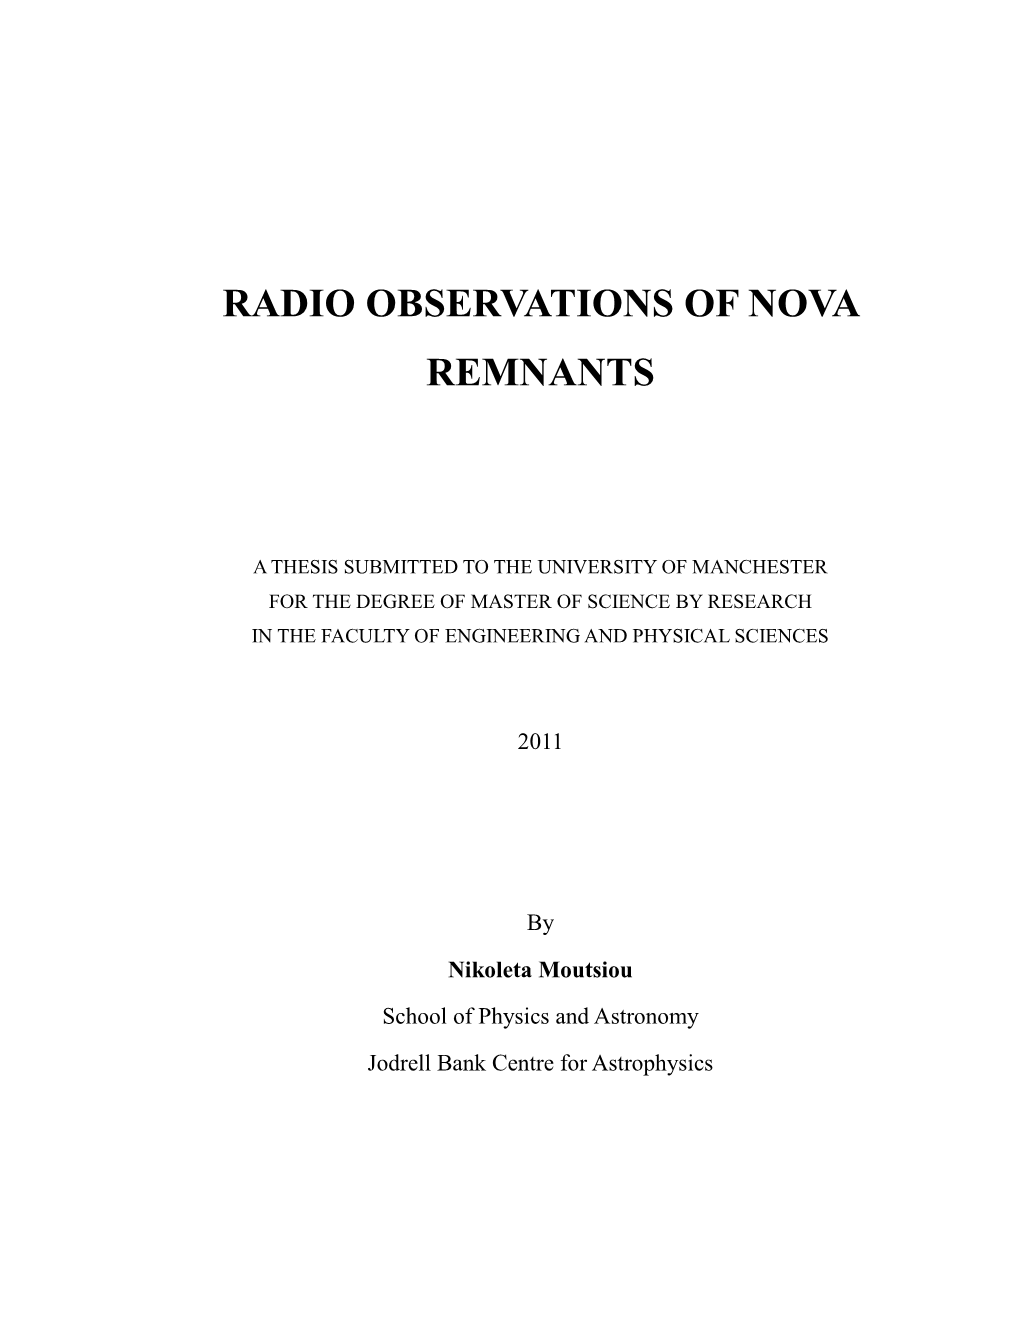 Radio Observations of Nova Remnants